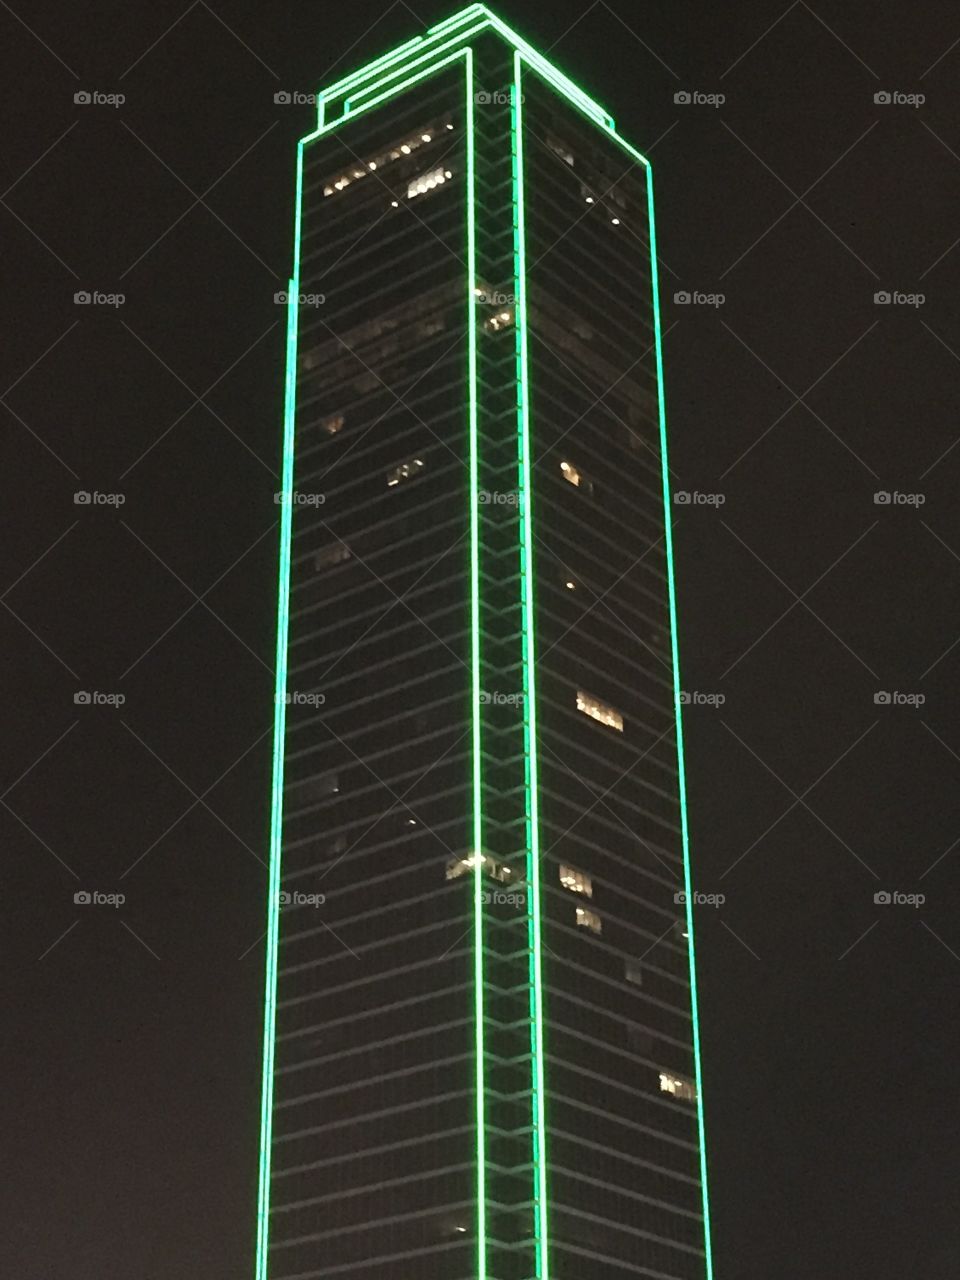 Dallas by night